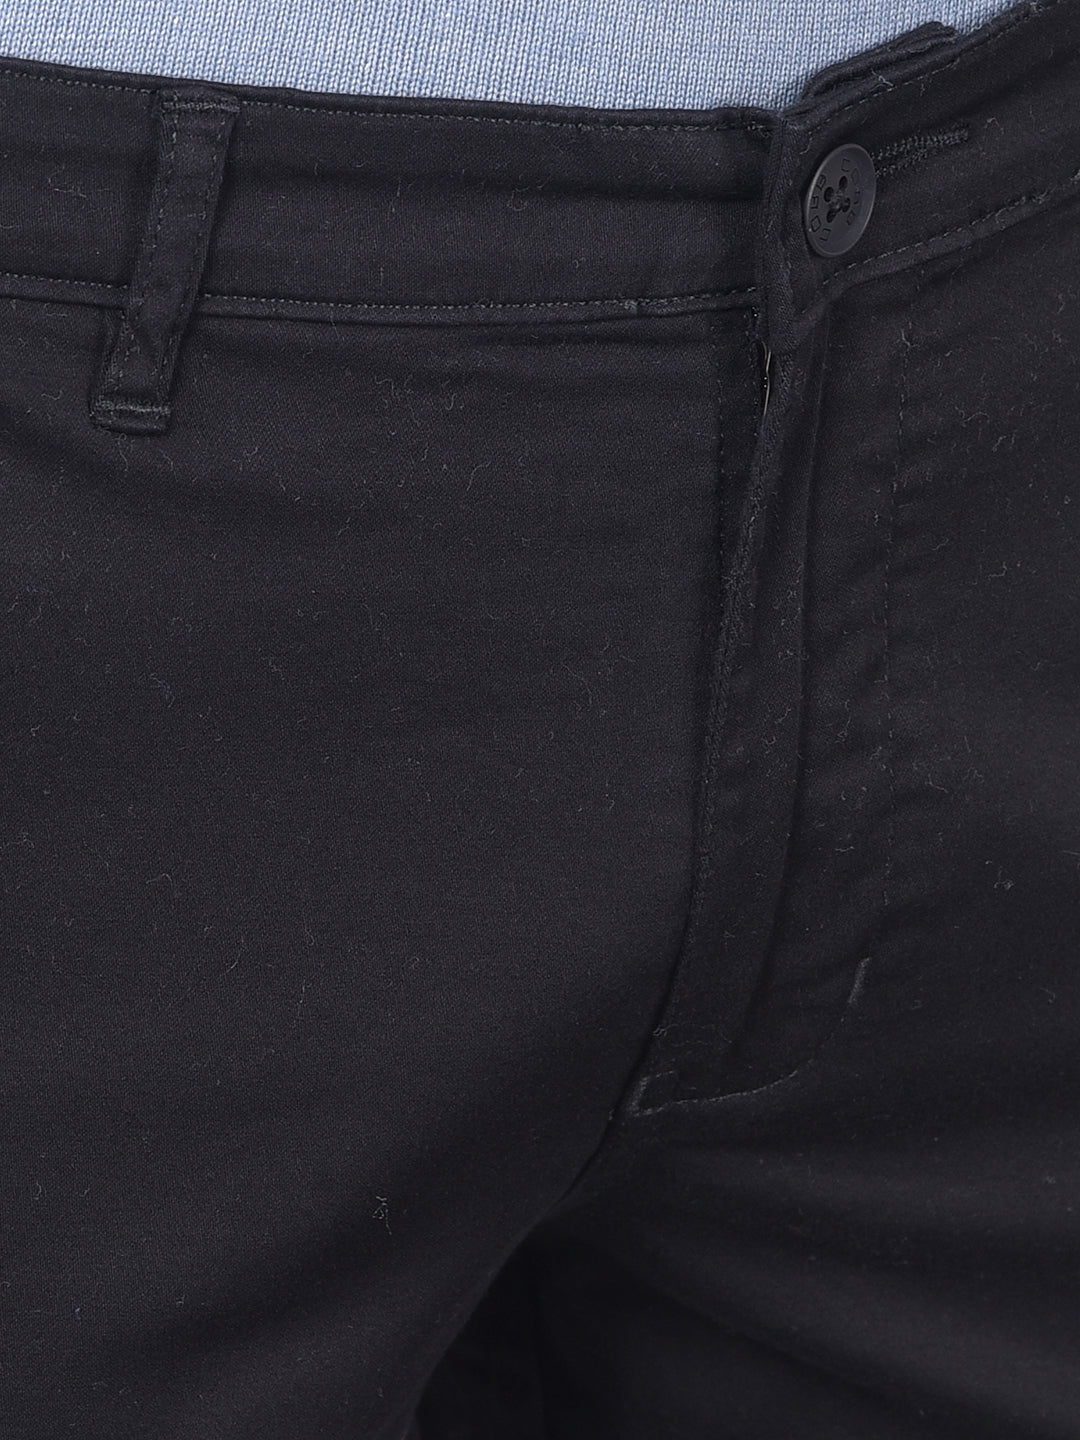 Men's Black Chinos & Khaki Pants | Nordstrom